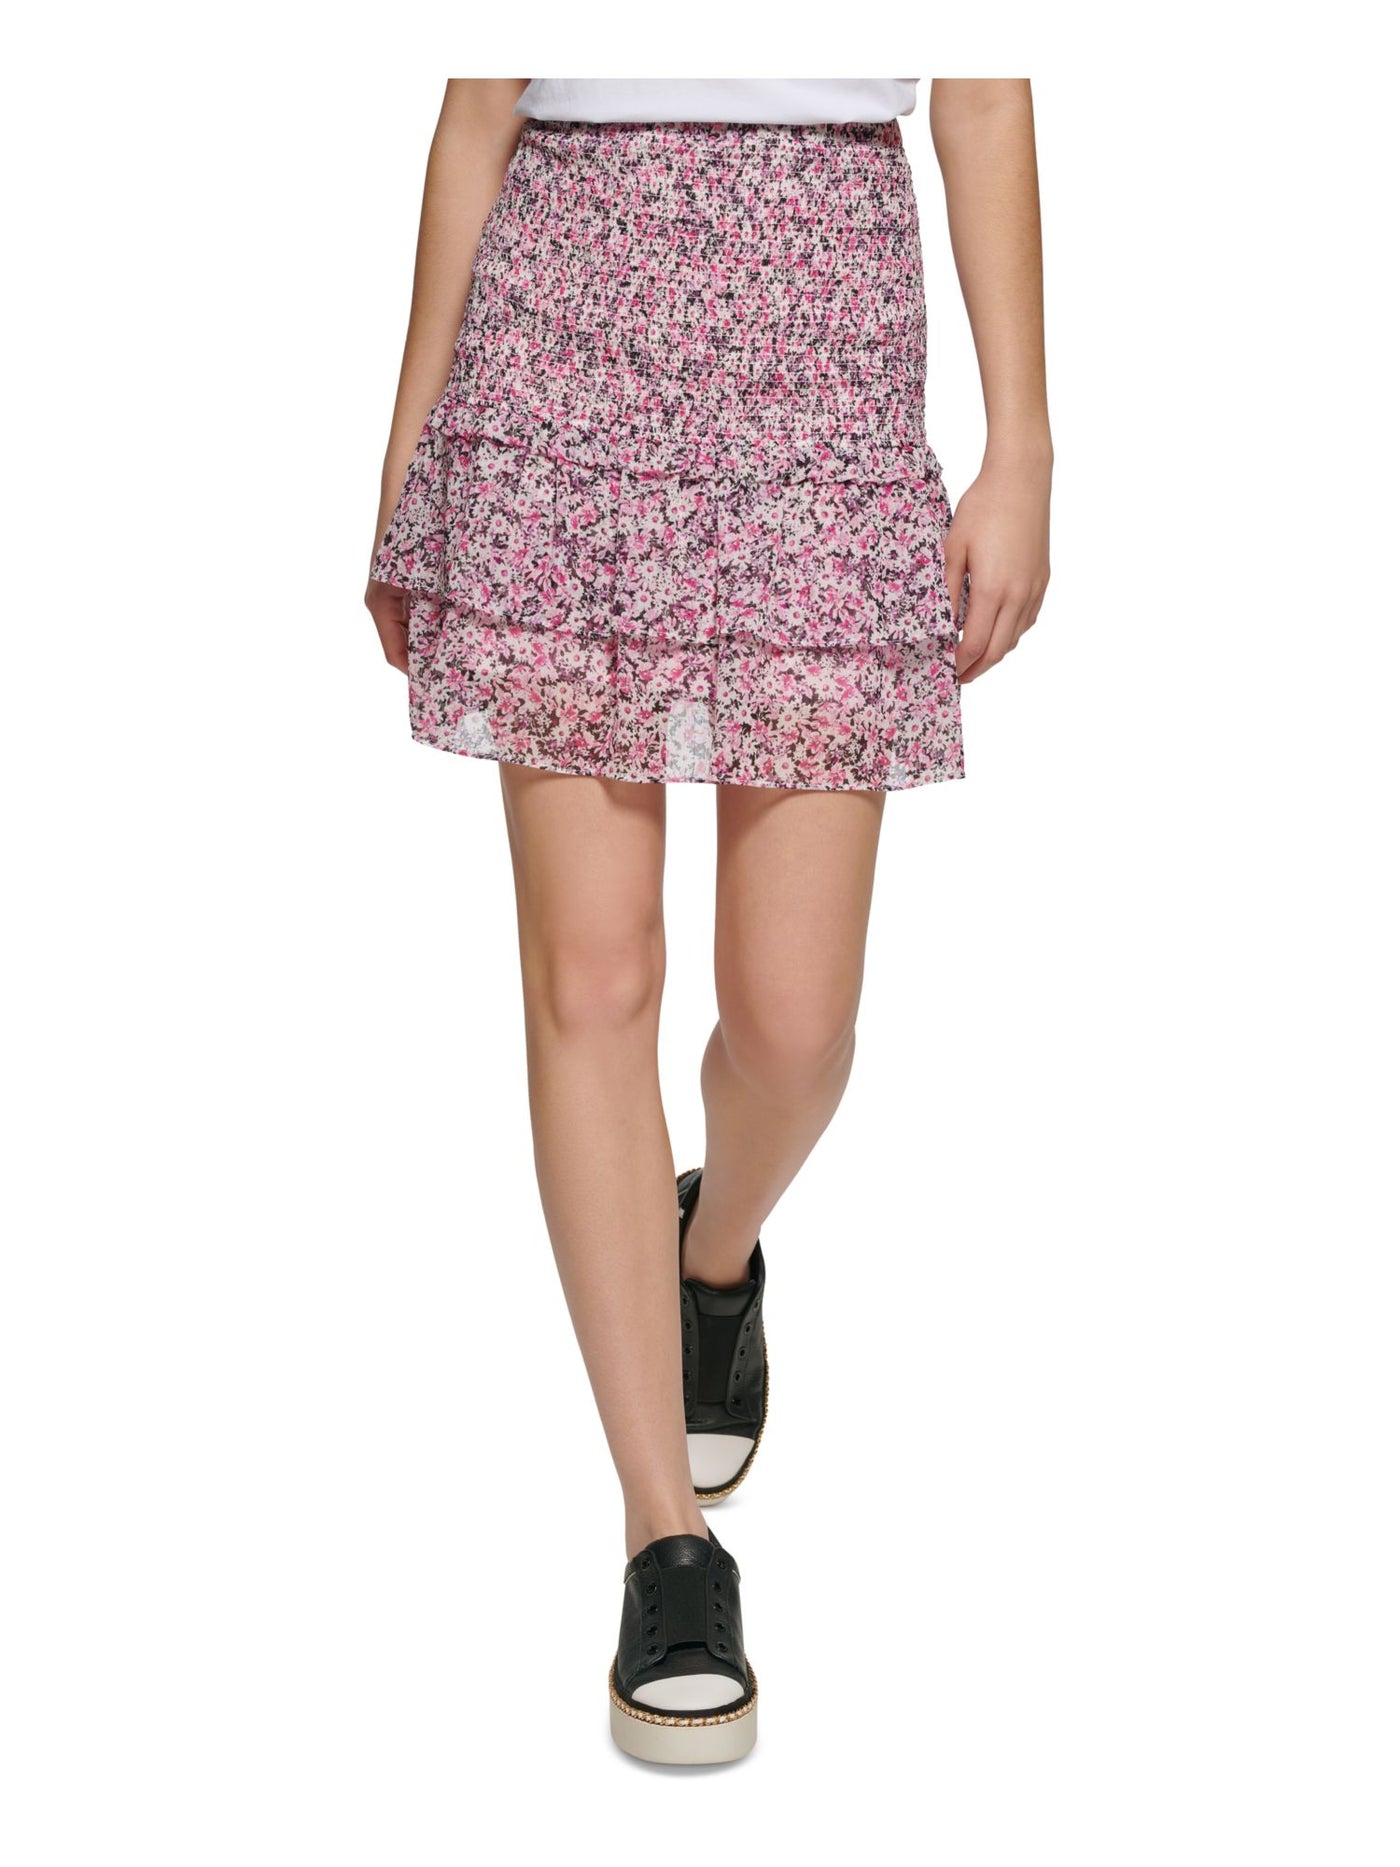 KARL LAGERFELD PARIS Womens Pink Smocked Lined Floral Short Ruffled Skirt S